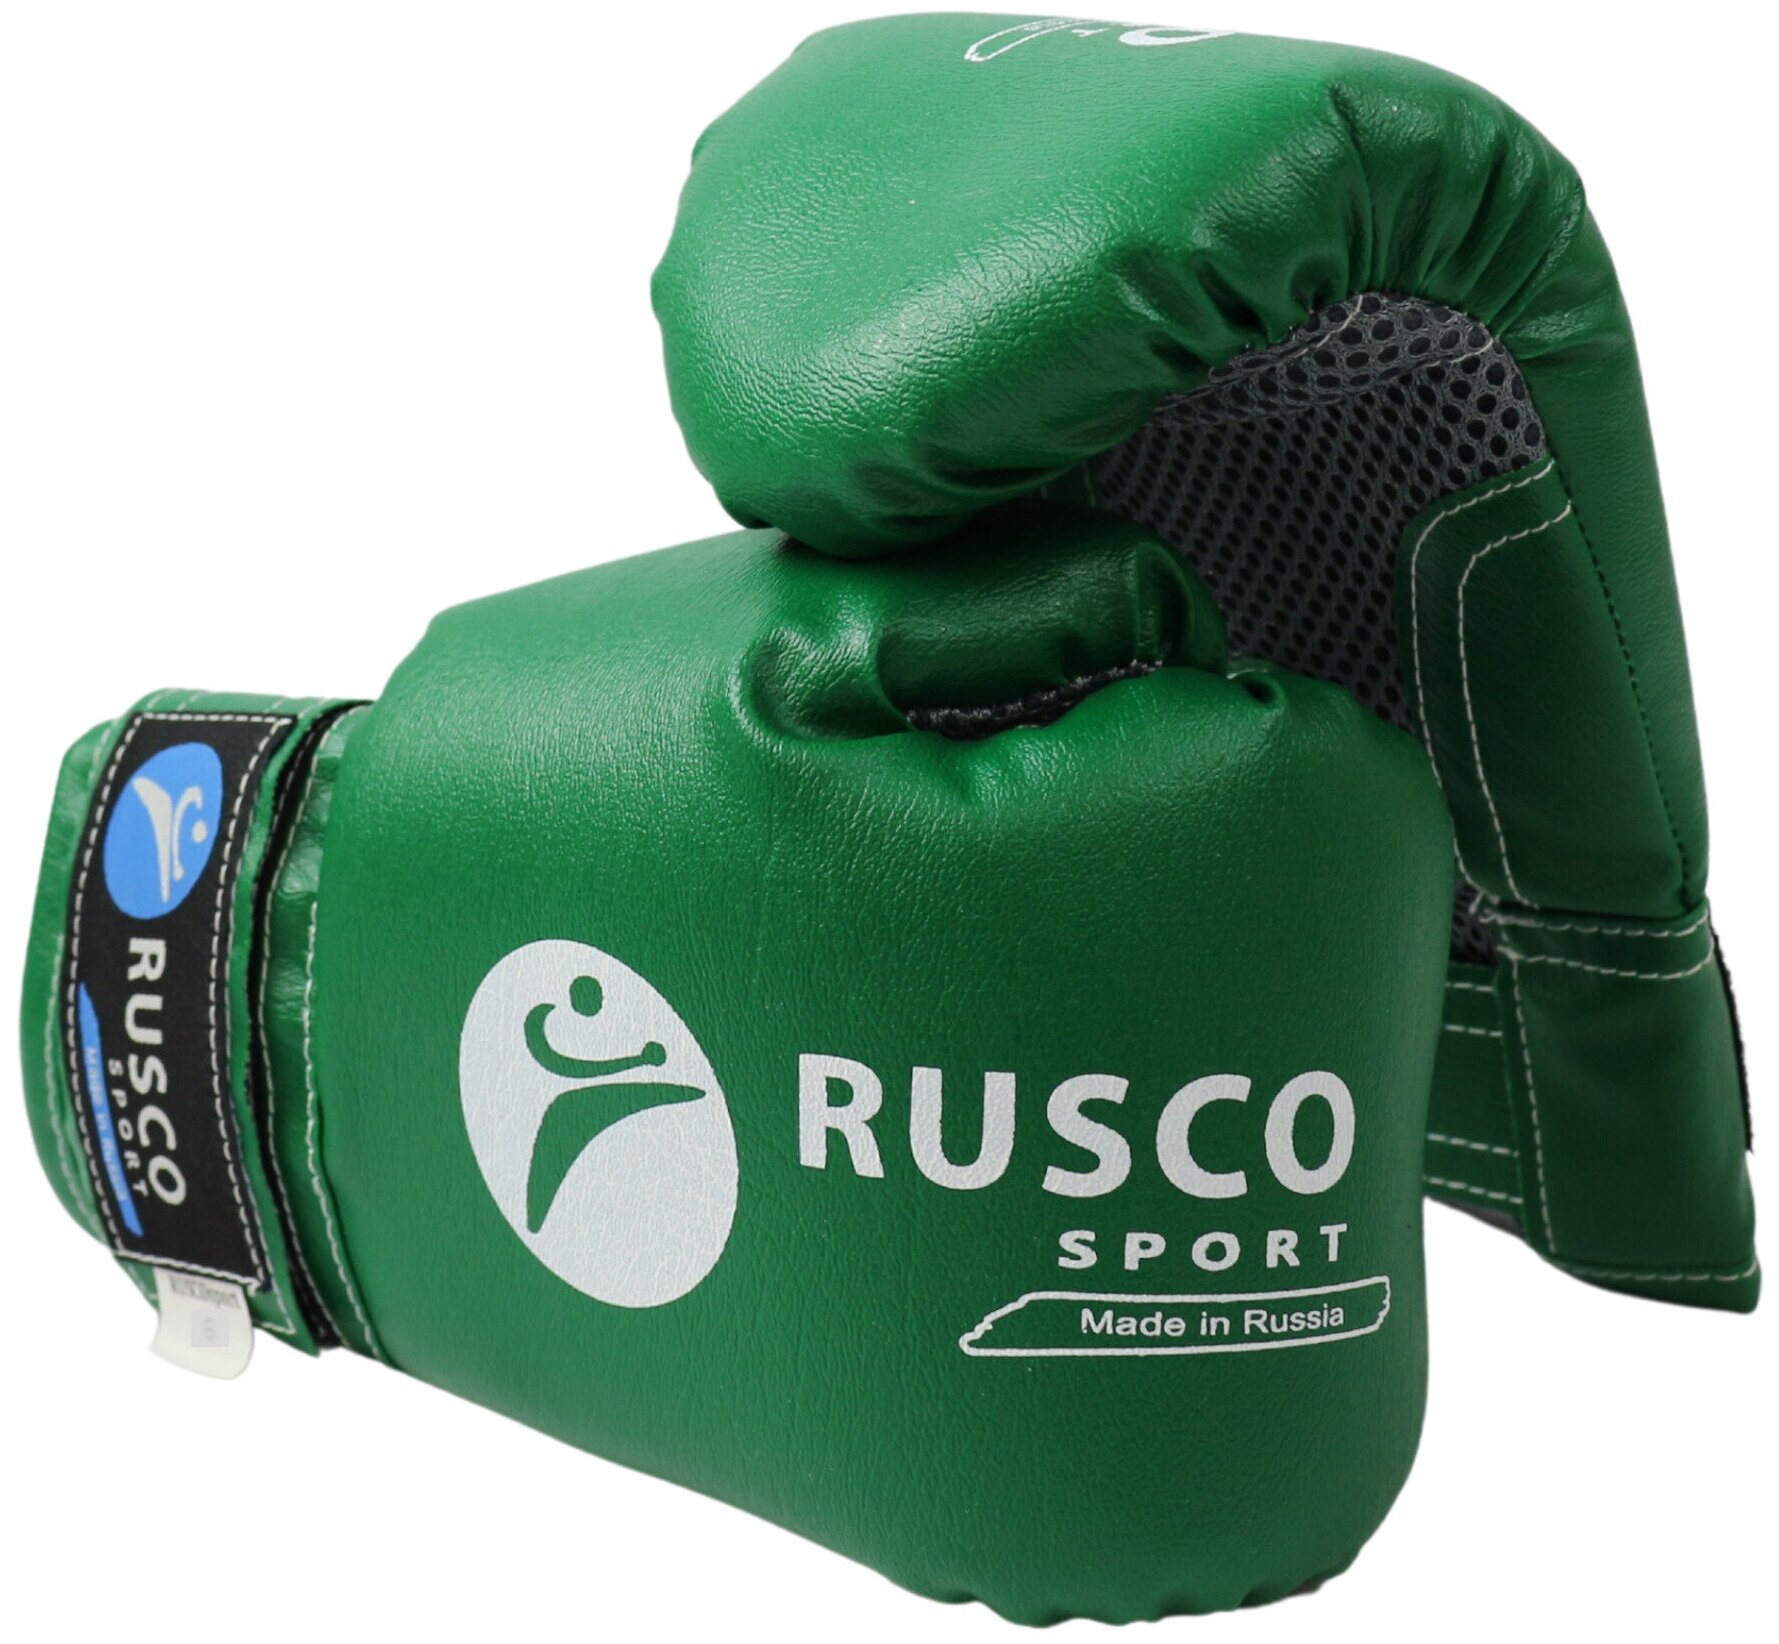   Rusco Sport  (6 OZ)